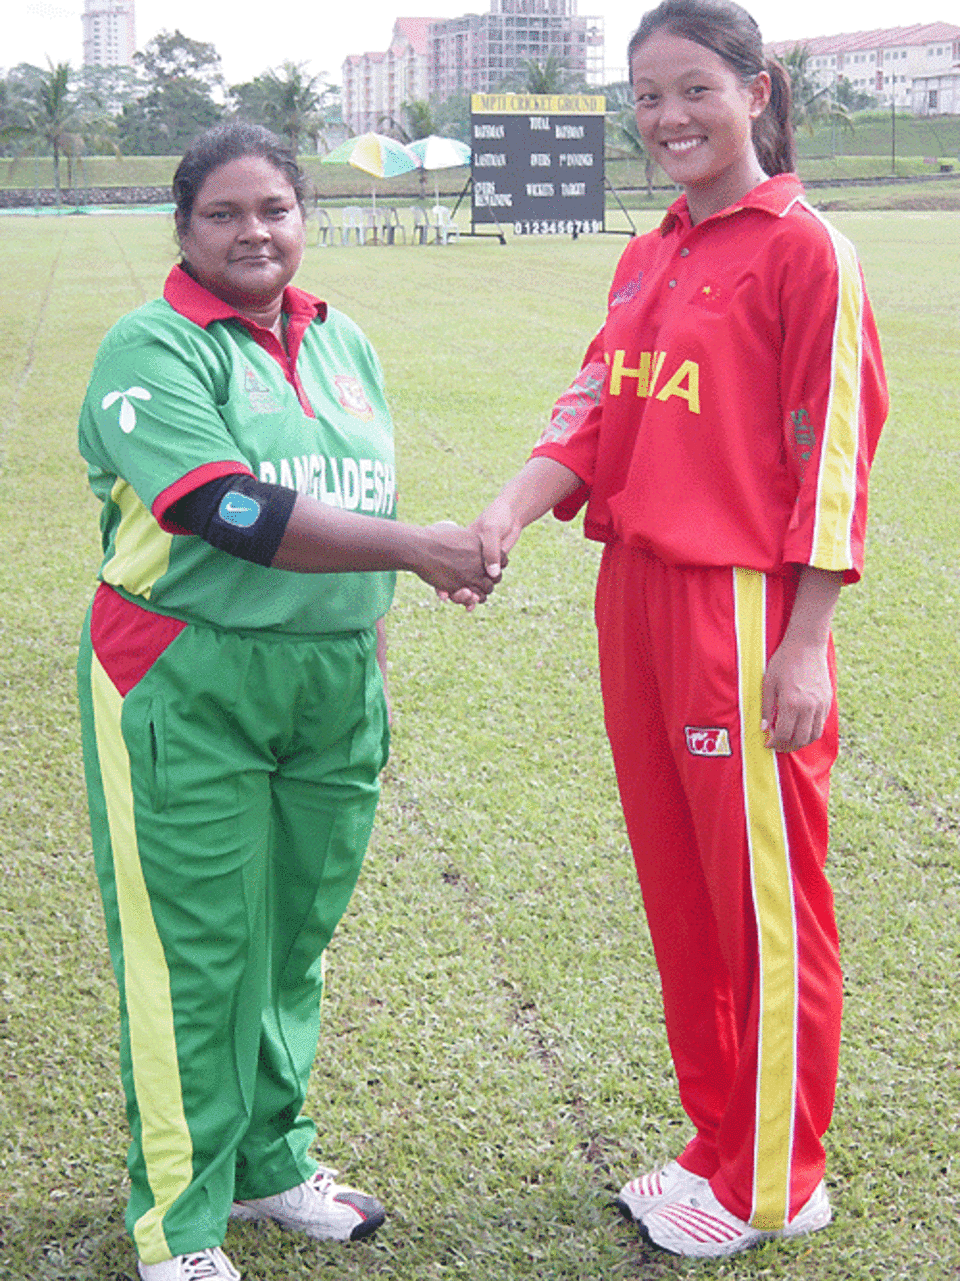 Bangladesh captain Tajkia Akhter and China captain Mei Chin Hua shake hands before their game